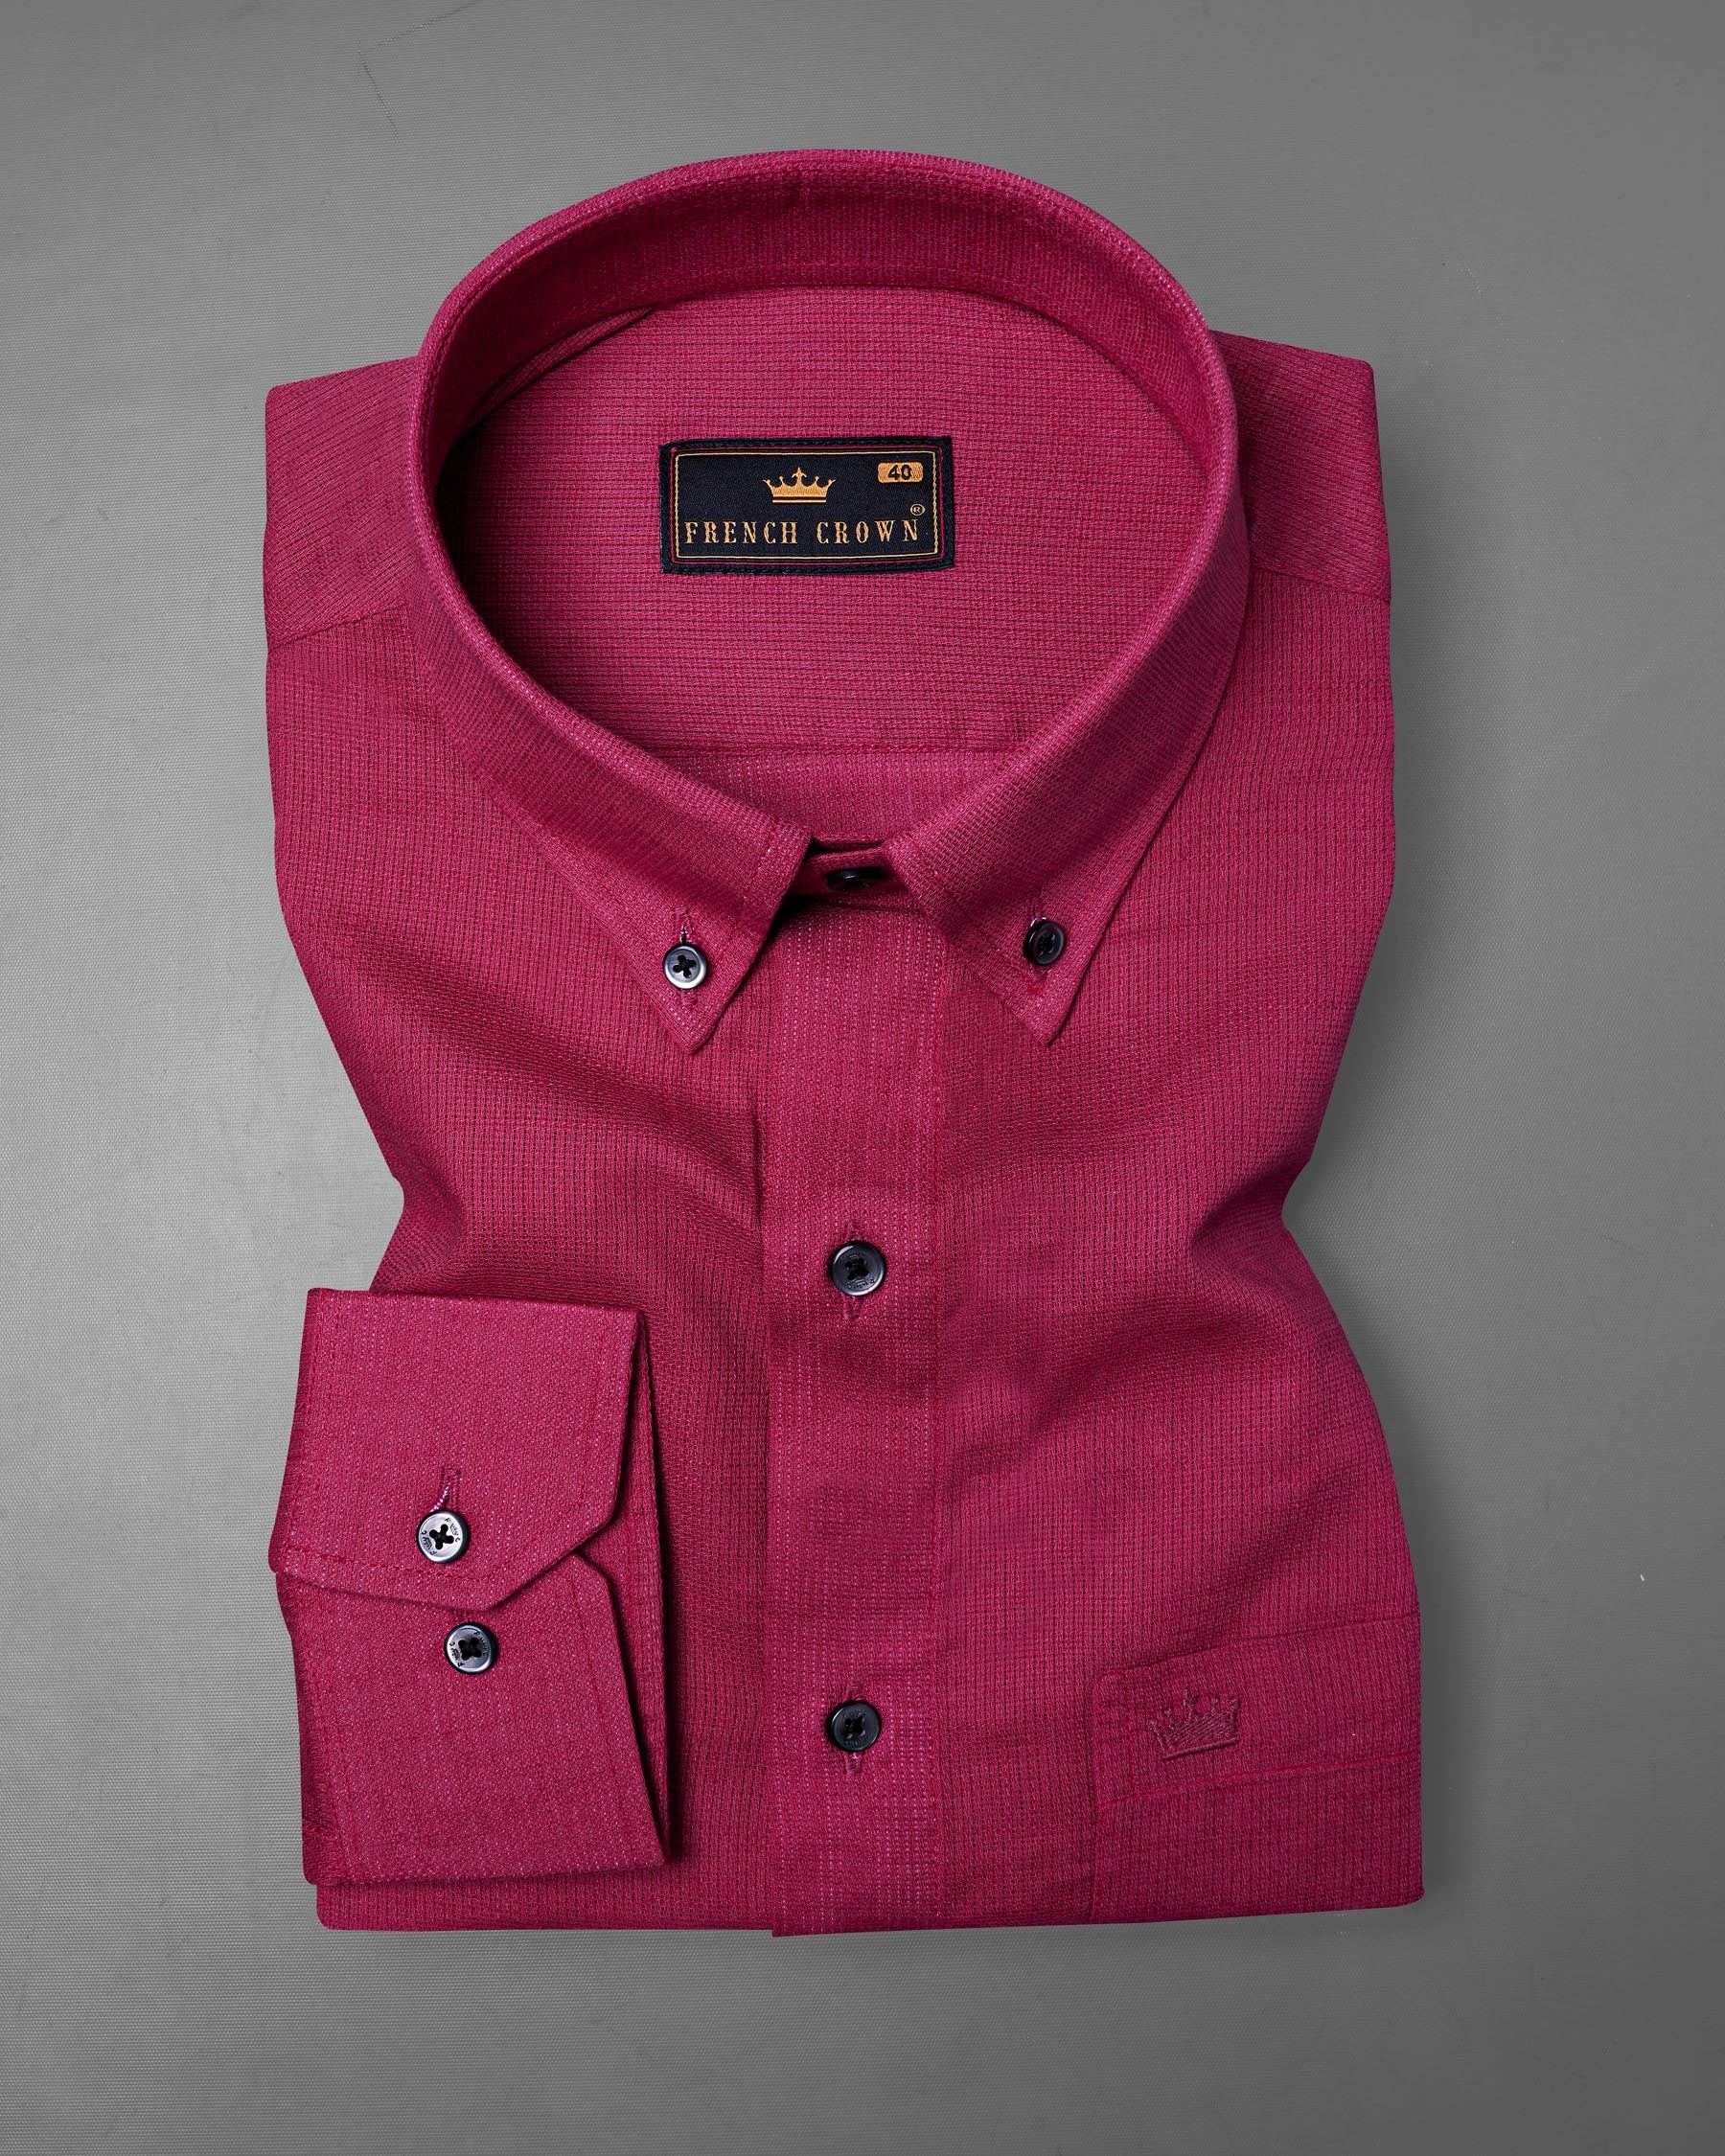 Mulberry Pink Dobby Textured Premium Giza Cotton Shirt 7841-BD-BLK-38, 7841-BD-BLK-H-38, 7841-BD-BLK-39, 7841-BD-BLK-H-39, 7841-BD-BLK-40, 7841-BD-BLK-H-40, 7841-BD-BLK-42, 7841-BD-BLK-H-42, 7841-BD-BLK-44, 7841-BD-BLK-H-44, 7841-BD-BLK-46, 7841-BD-BLK-H-46, 7841-BD-BLK-48, 7841-BD-BLK-H-48, 7841-BD-BLK-50, 7841-BD-BLK-H-50, 7841-BD-BLK-52, 7841-BD-BLK-H-52